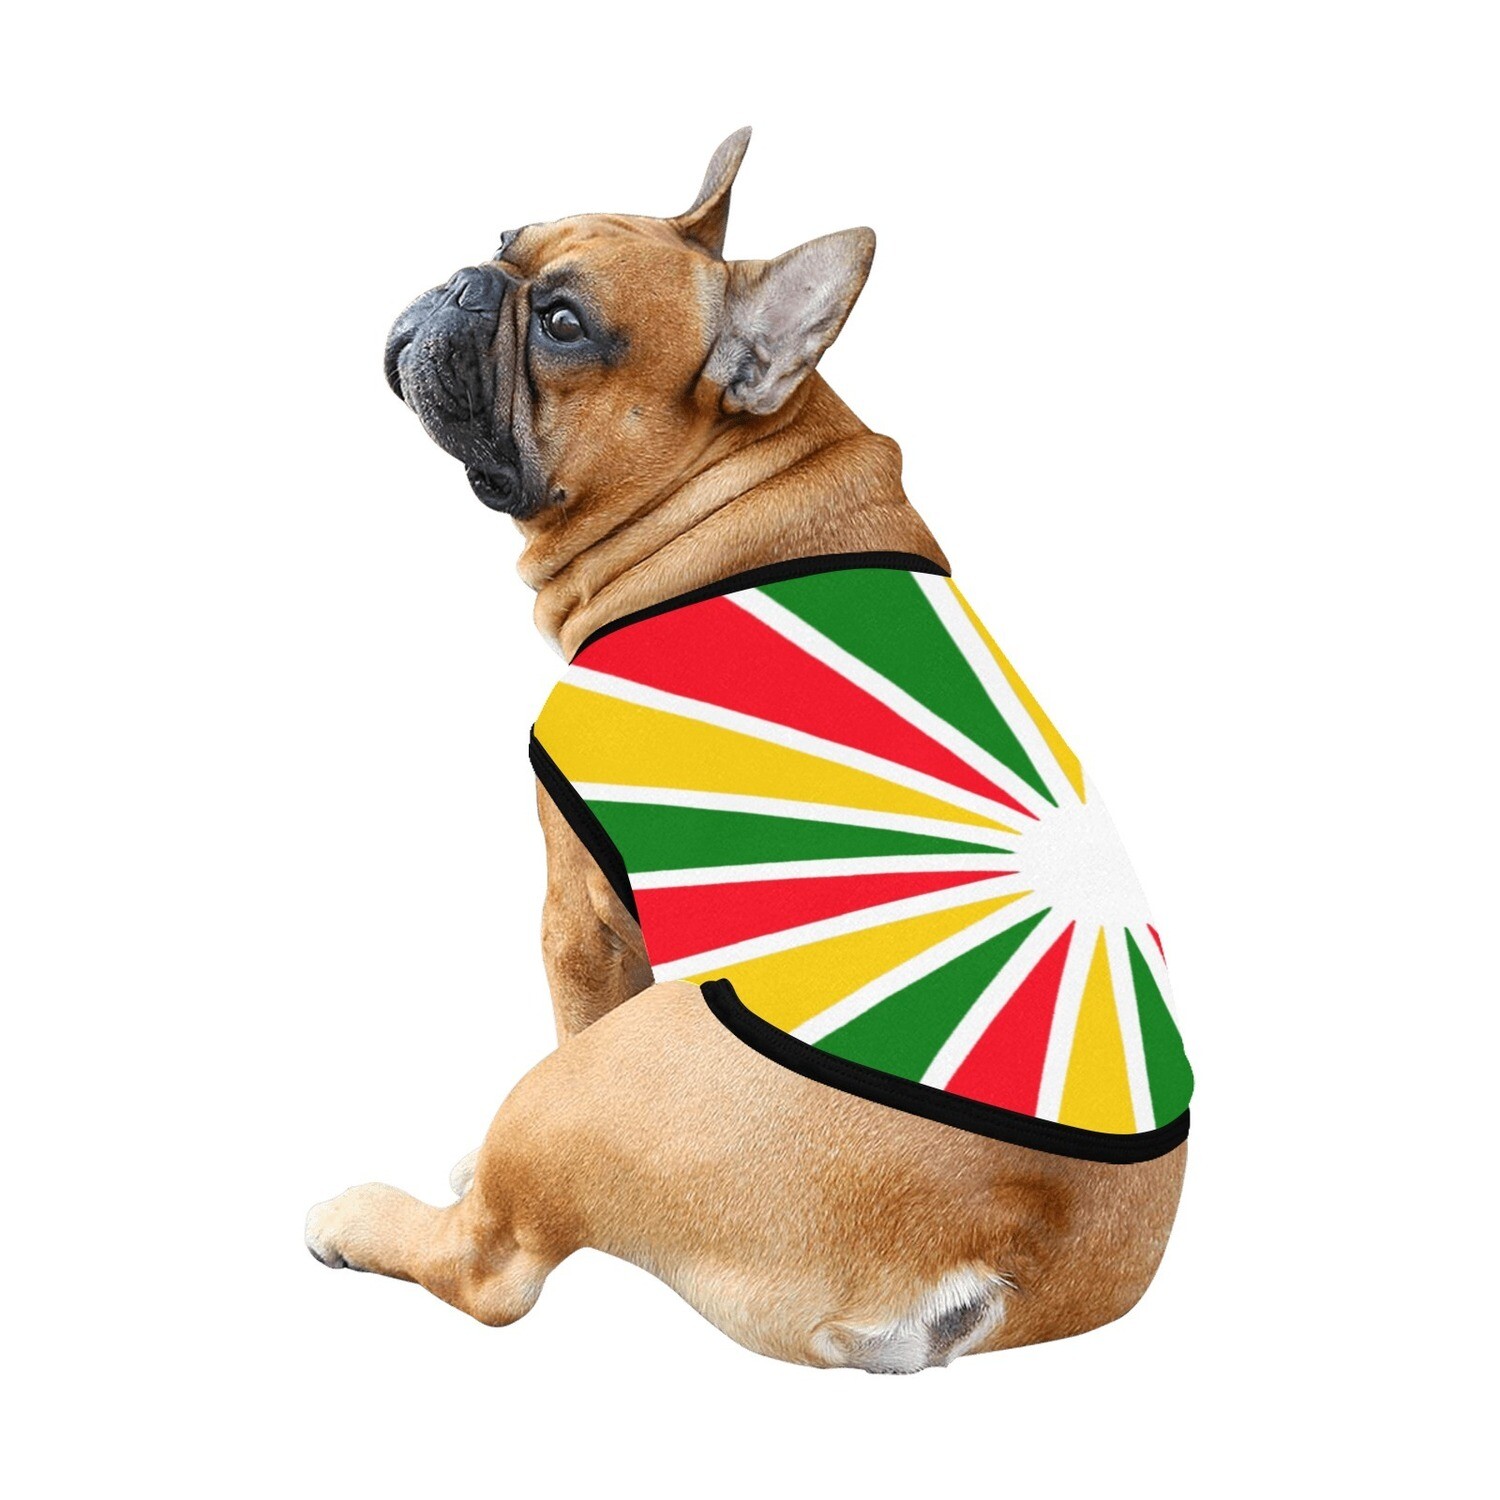 🐕 Rasta Spectrum Dog Tank Top, Dog shirt, Dog clothes, Gifts, 7 sizes XS to 3XL, Jamaican flag, Jamaica, dog tank top, dog t-shirt, jerseyL, dog gifts, white